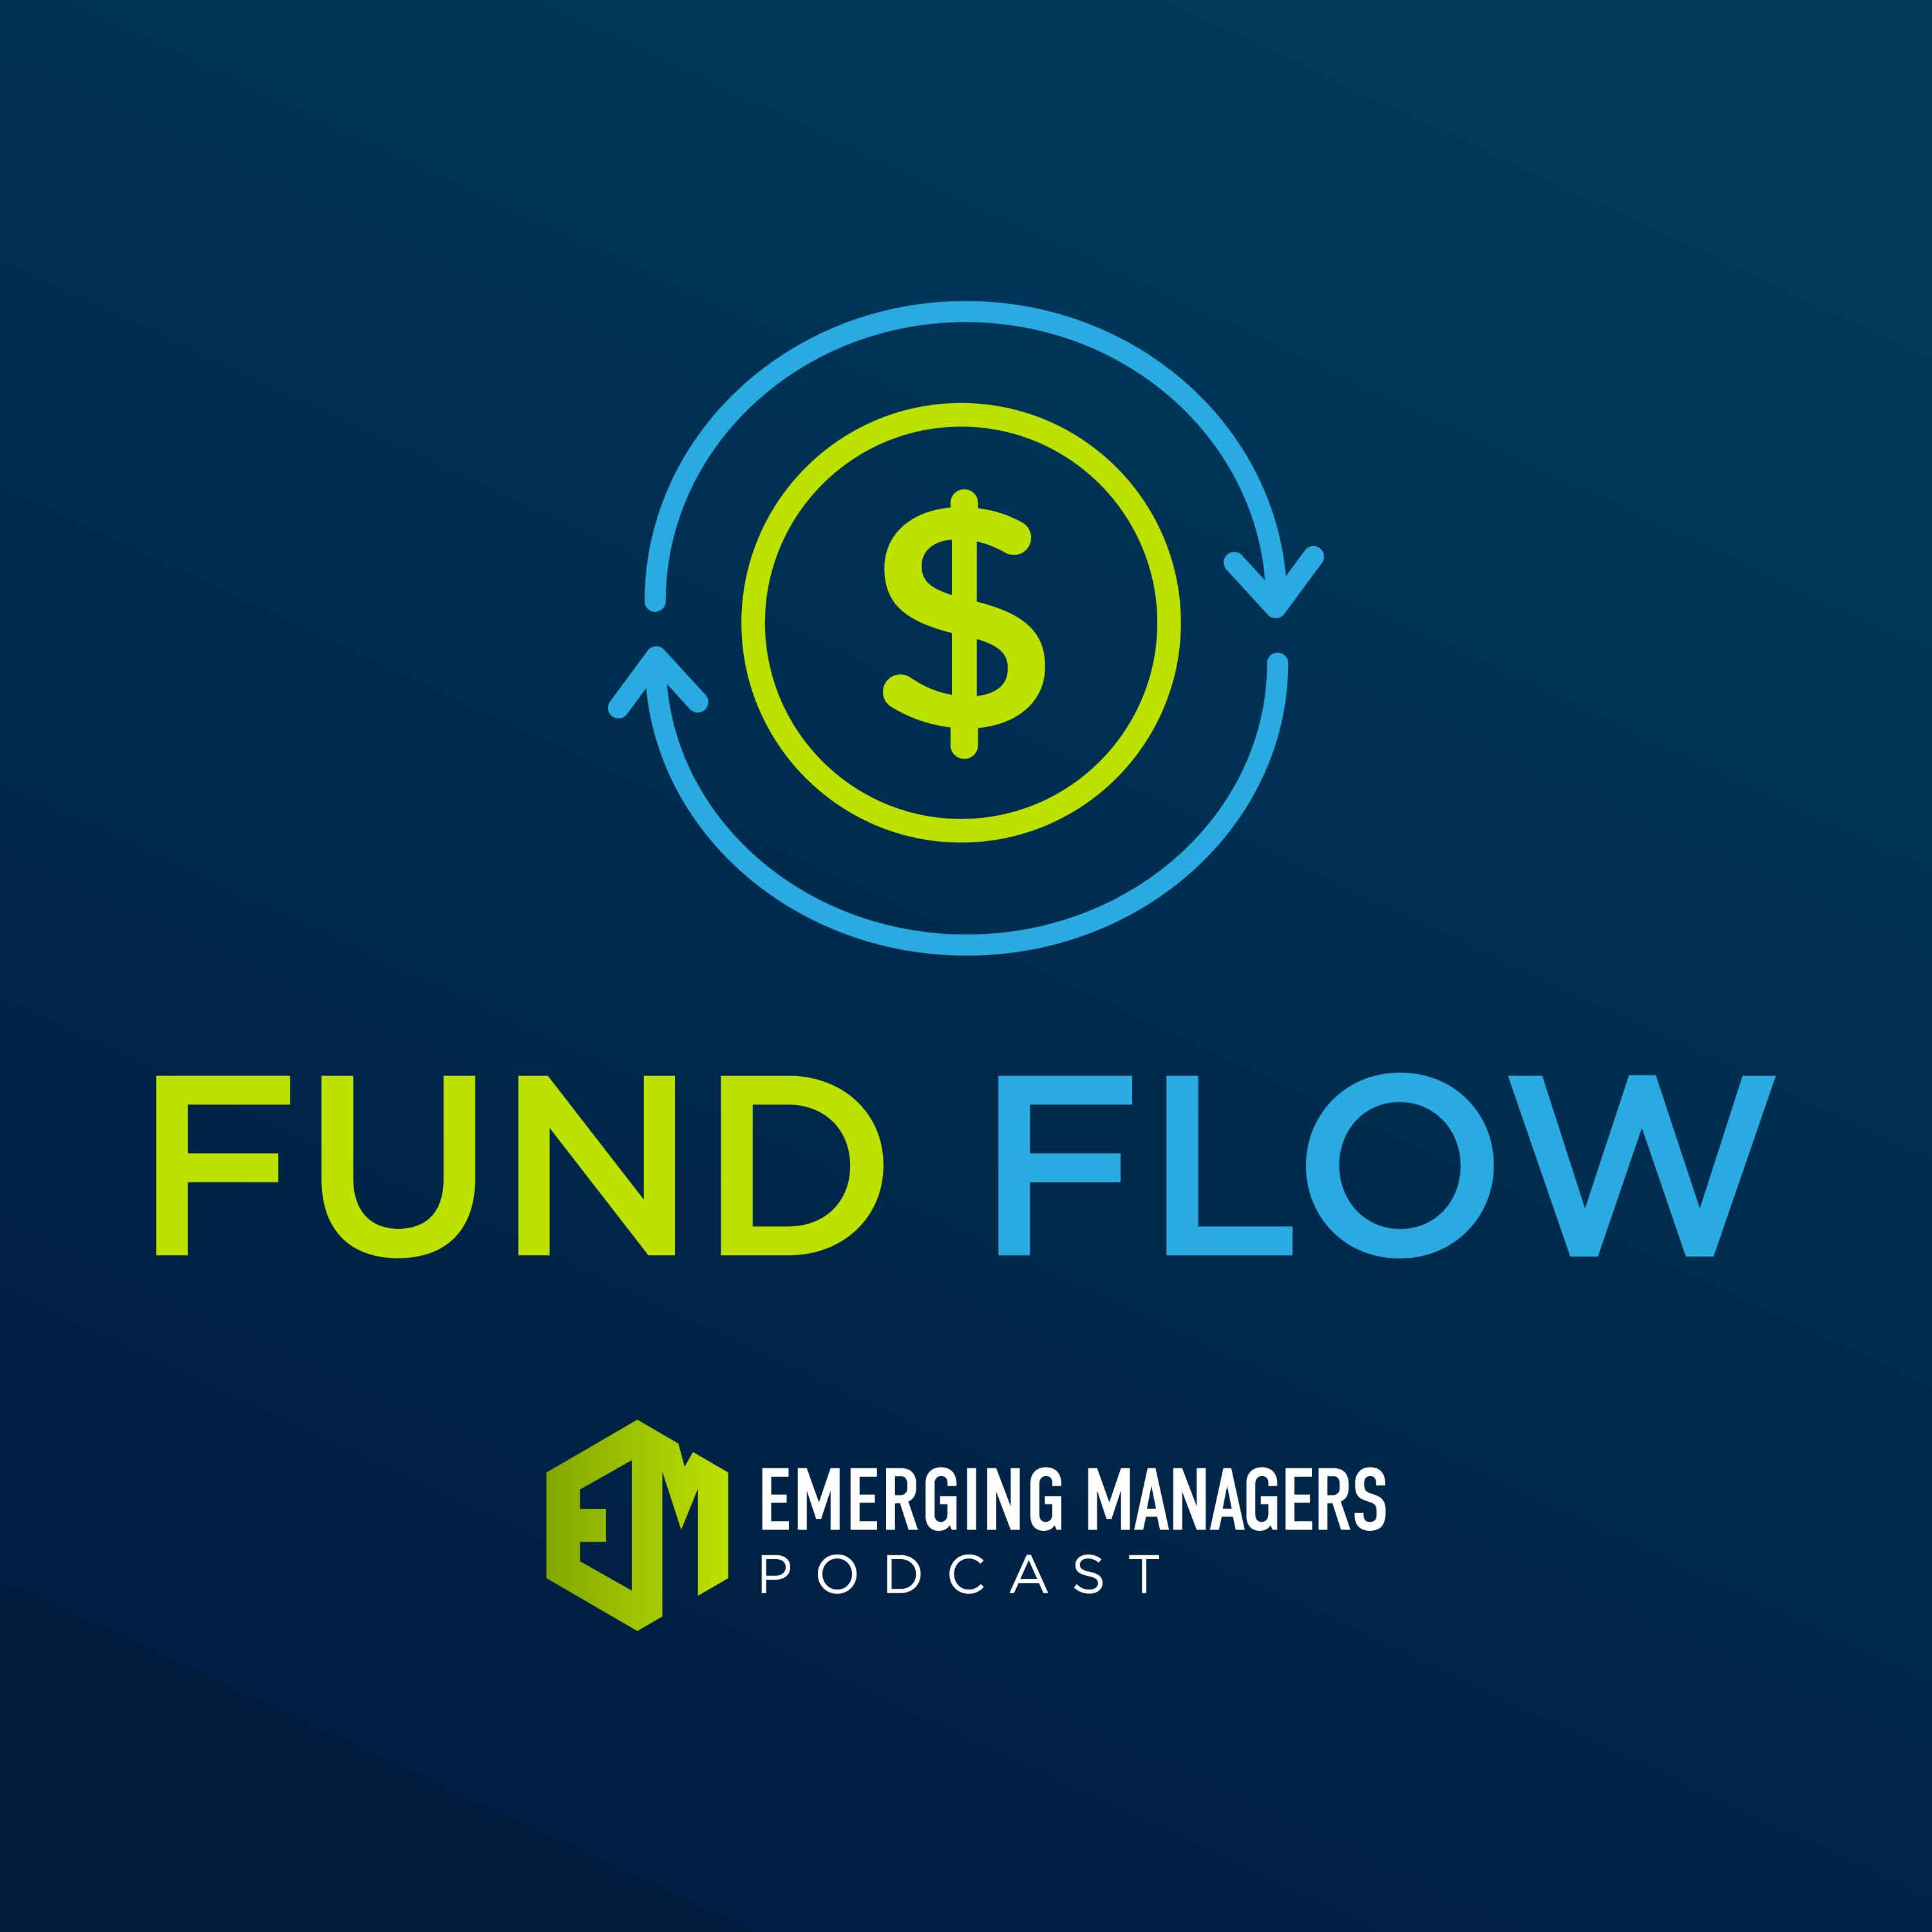 Artwork for podcast Fund Flow